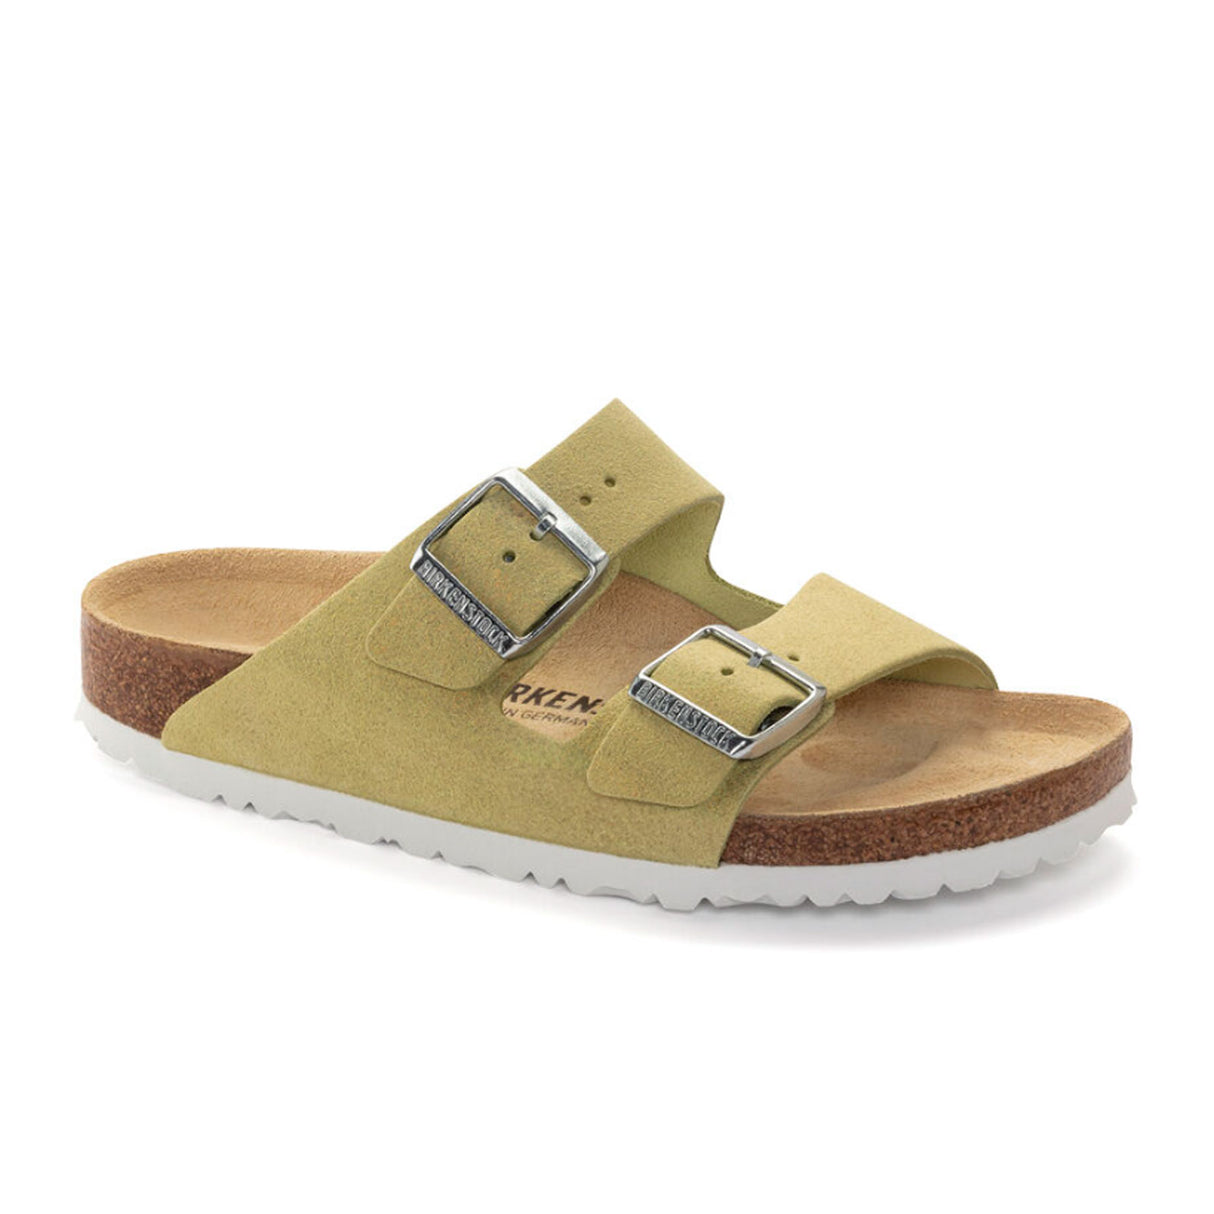 Birkenstock Arizona Narrow Slide Sandal (Women) - Shimmering Popcorn Suede Sandals - Slide - The Heel Shoe Fitters